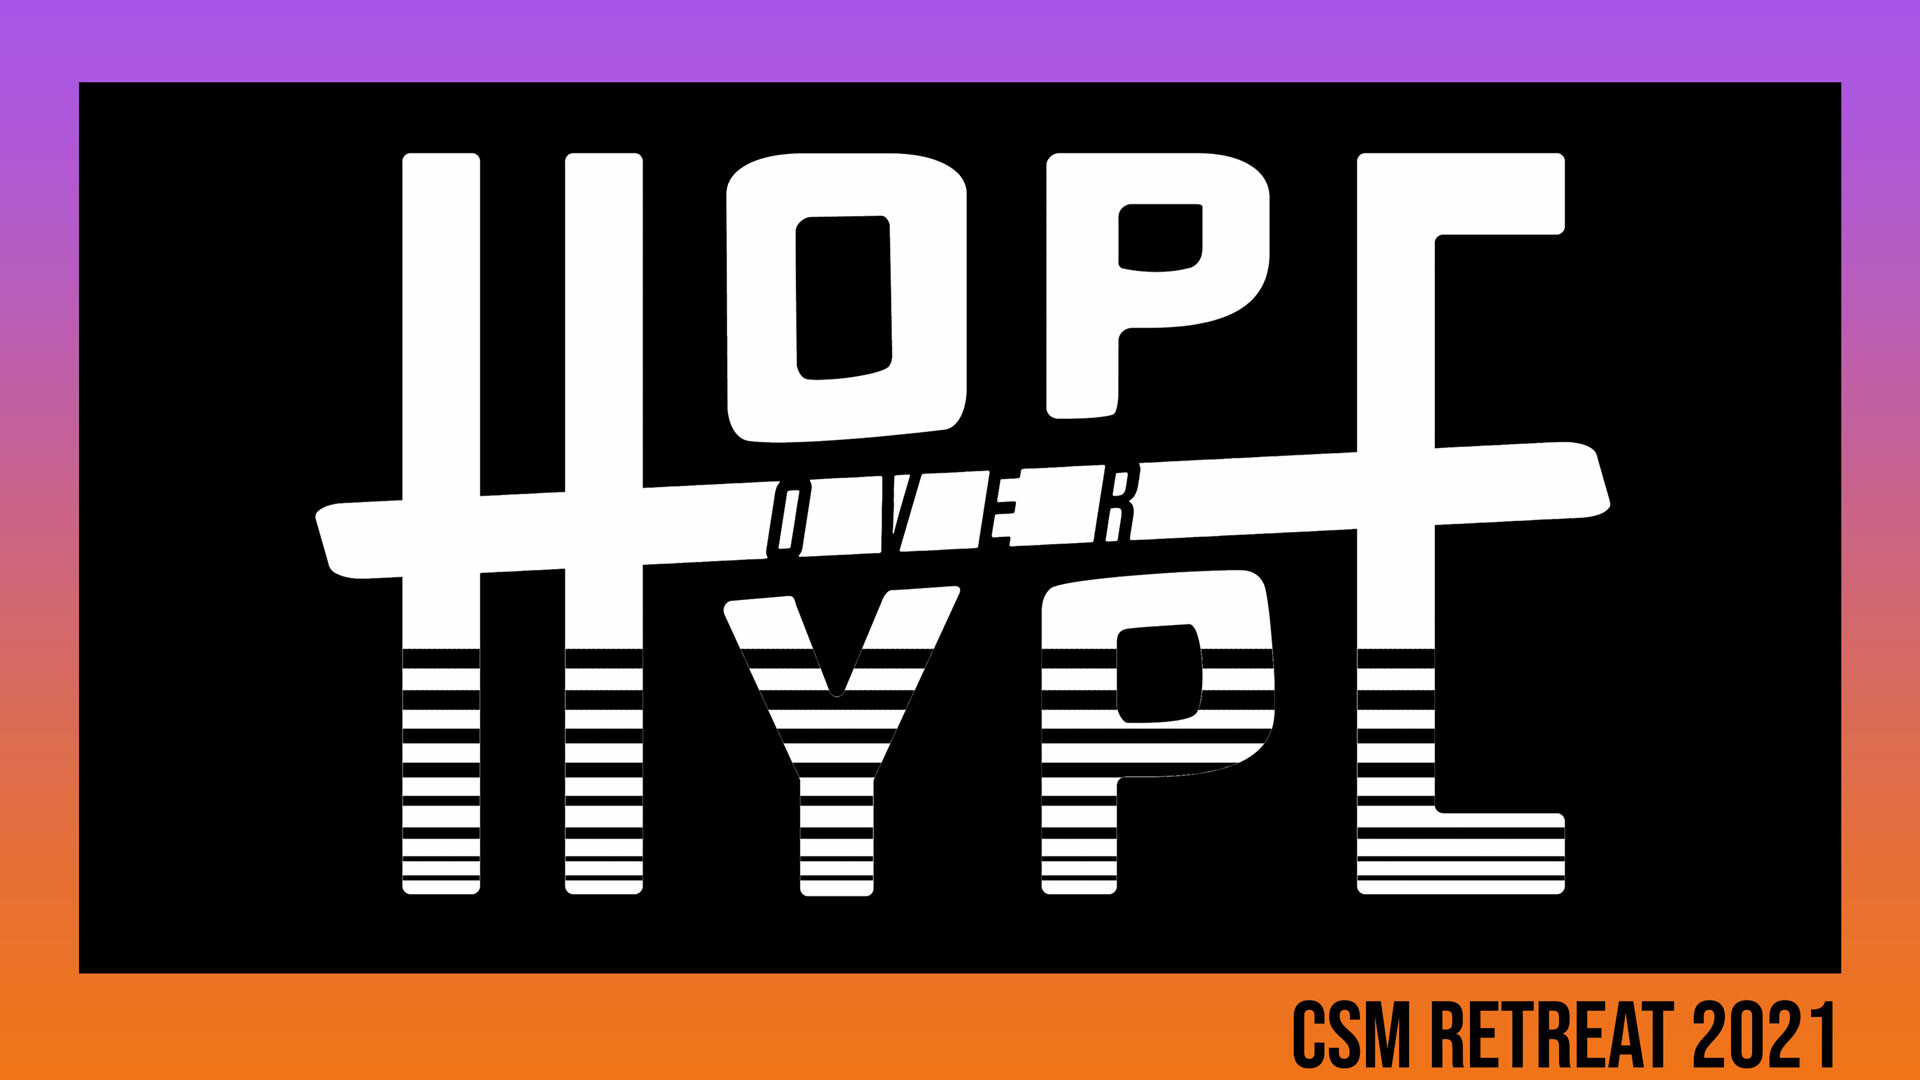 Hope Over Hype - CSM Retreat 2021